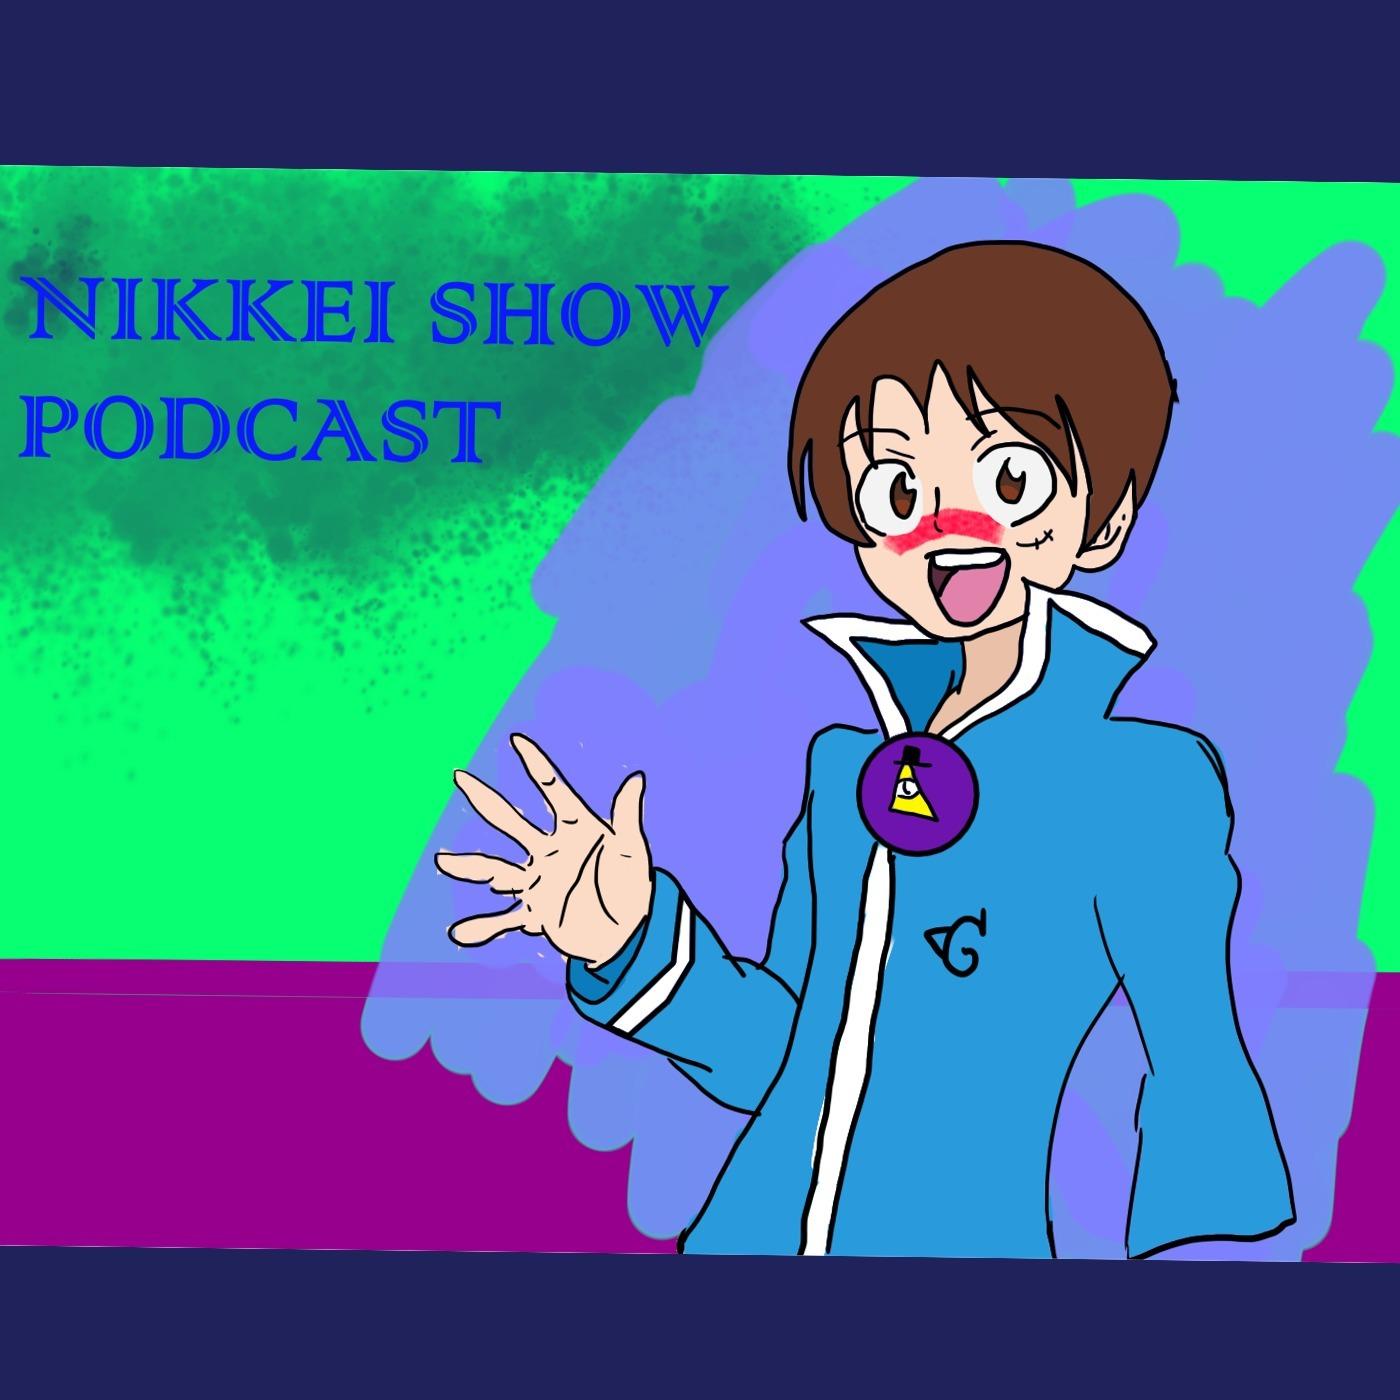 Nikkei Show Podcast